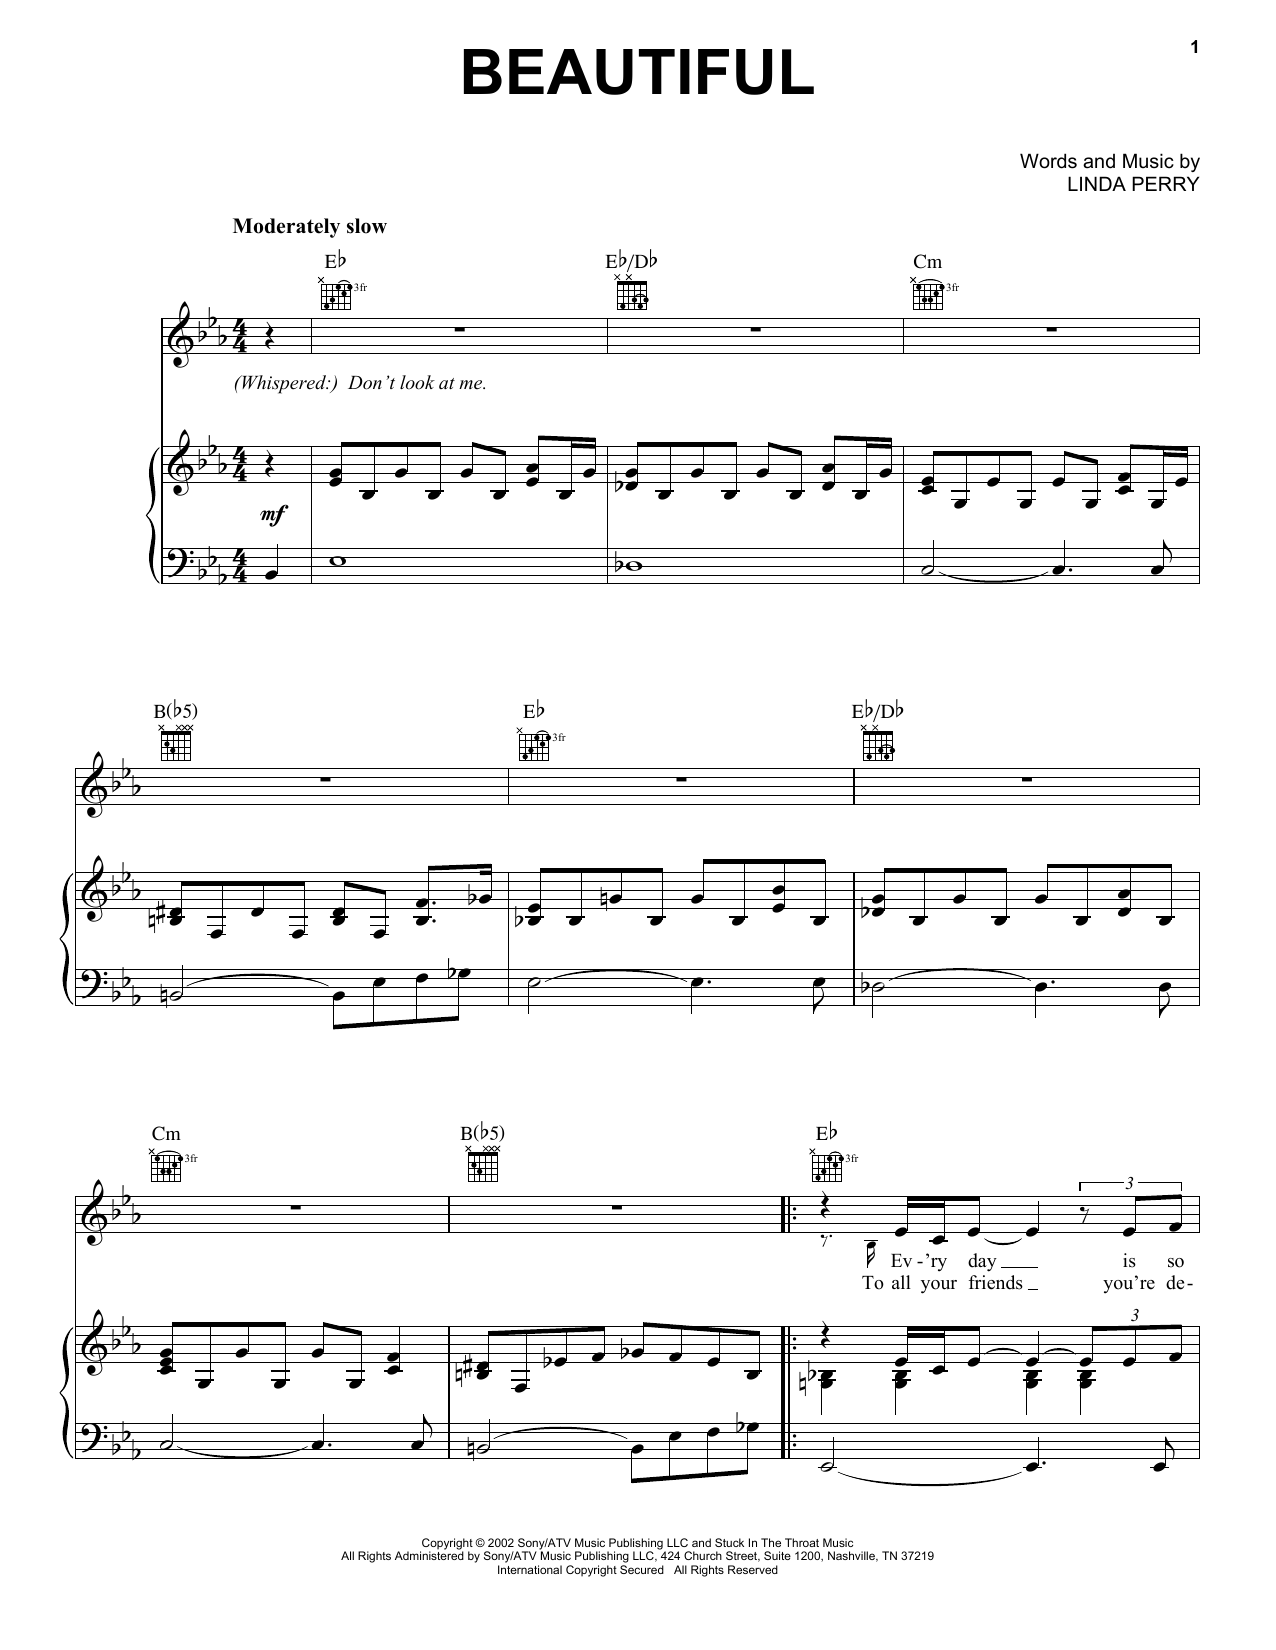 Christina Aguilera Beautiful Sheet Music Notes & Chords for Alto Saxophone - Download or Print PDF